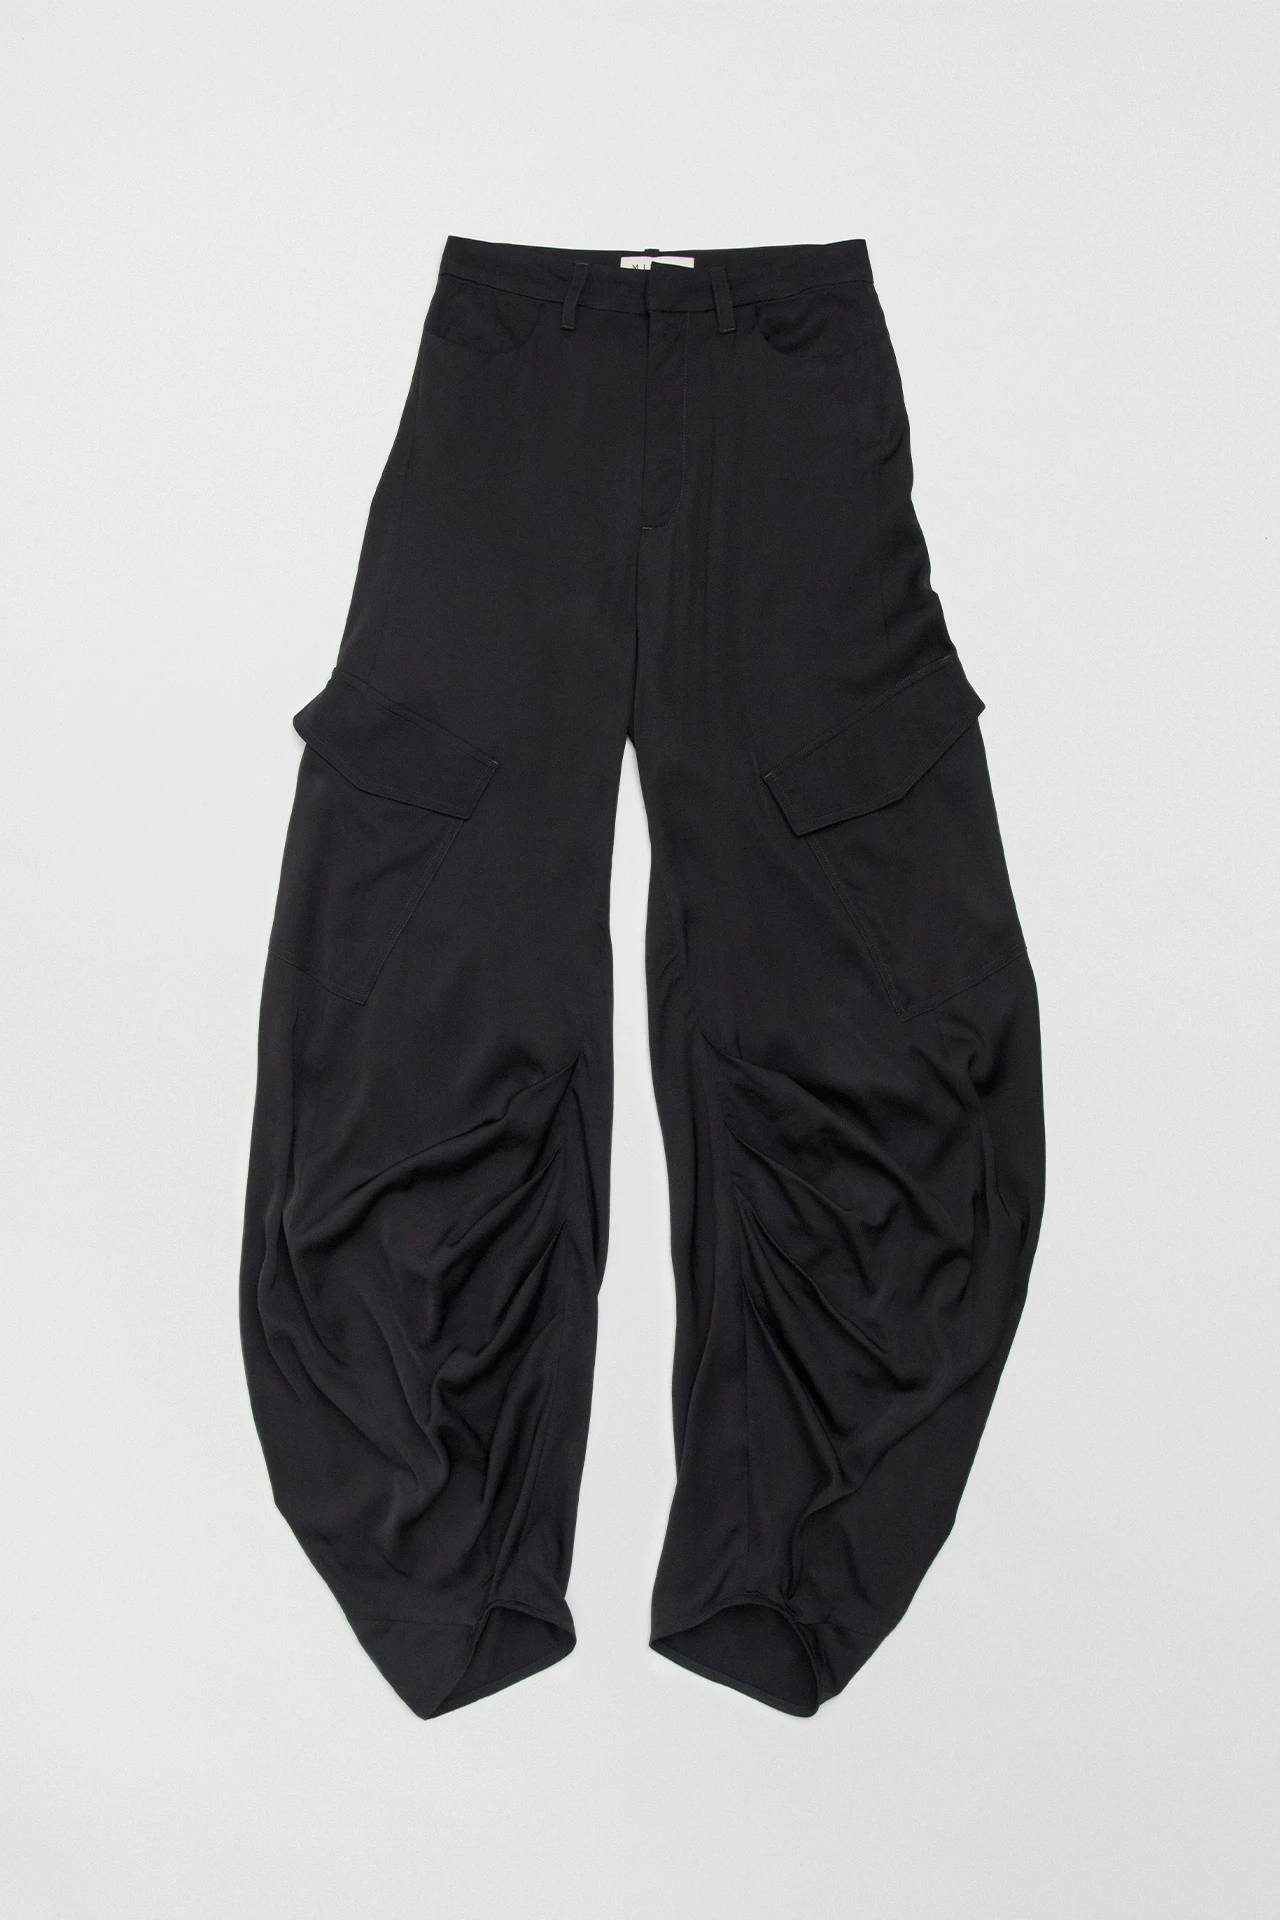 Miista-sibuca-black-trousers-01